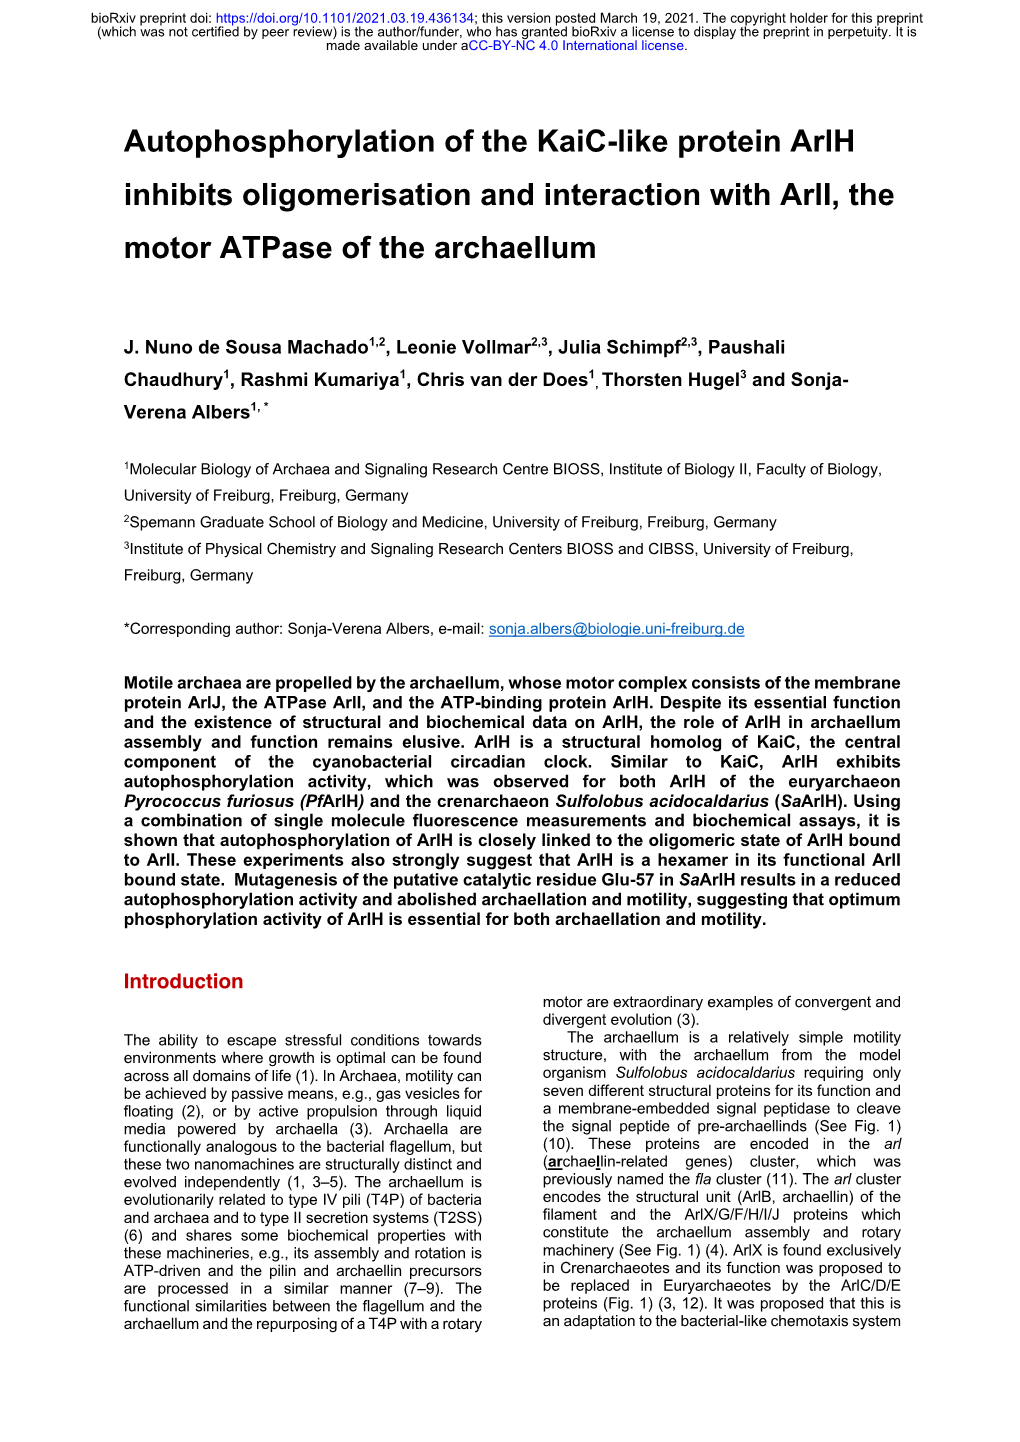 Autophosphorylation of the Kaic-Like Protein Arlh Inhibits Oligomerisation and Interaction with Arli, the Motor Atpase of the Archaellum